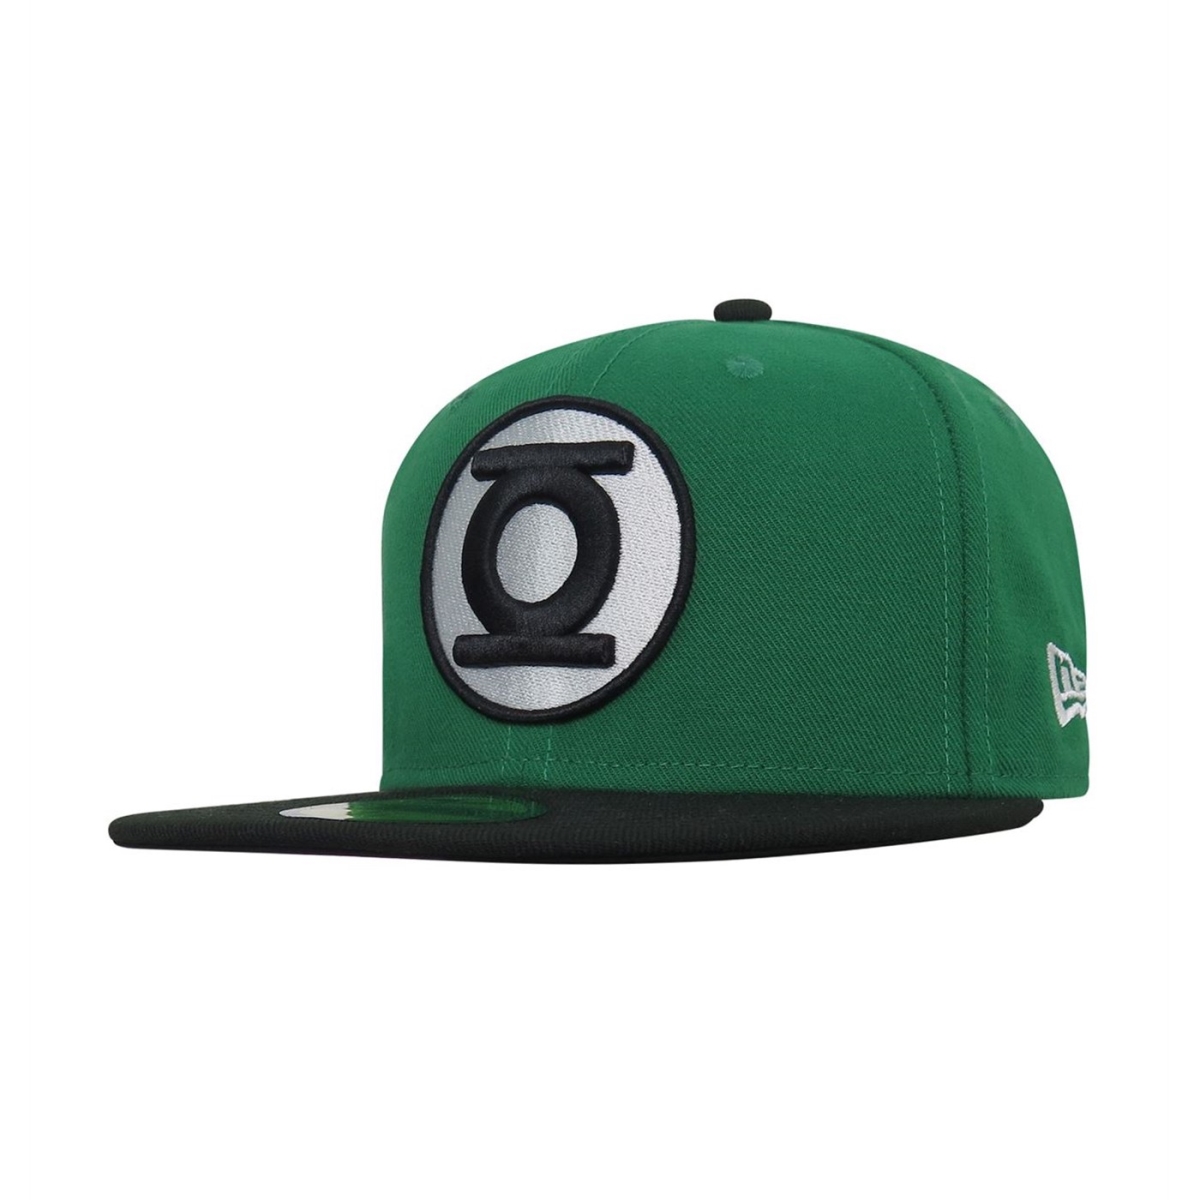 Picture of Green Lantern hatglhaljordan5950-714-7 1-4 Fitted Green Lantern Hal Jordan 59Fifty Fitted Hat - Size 7.25